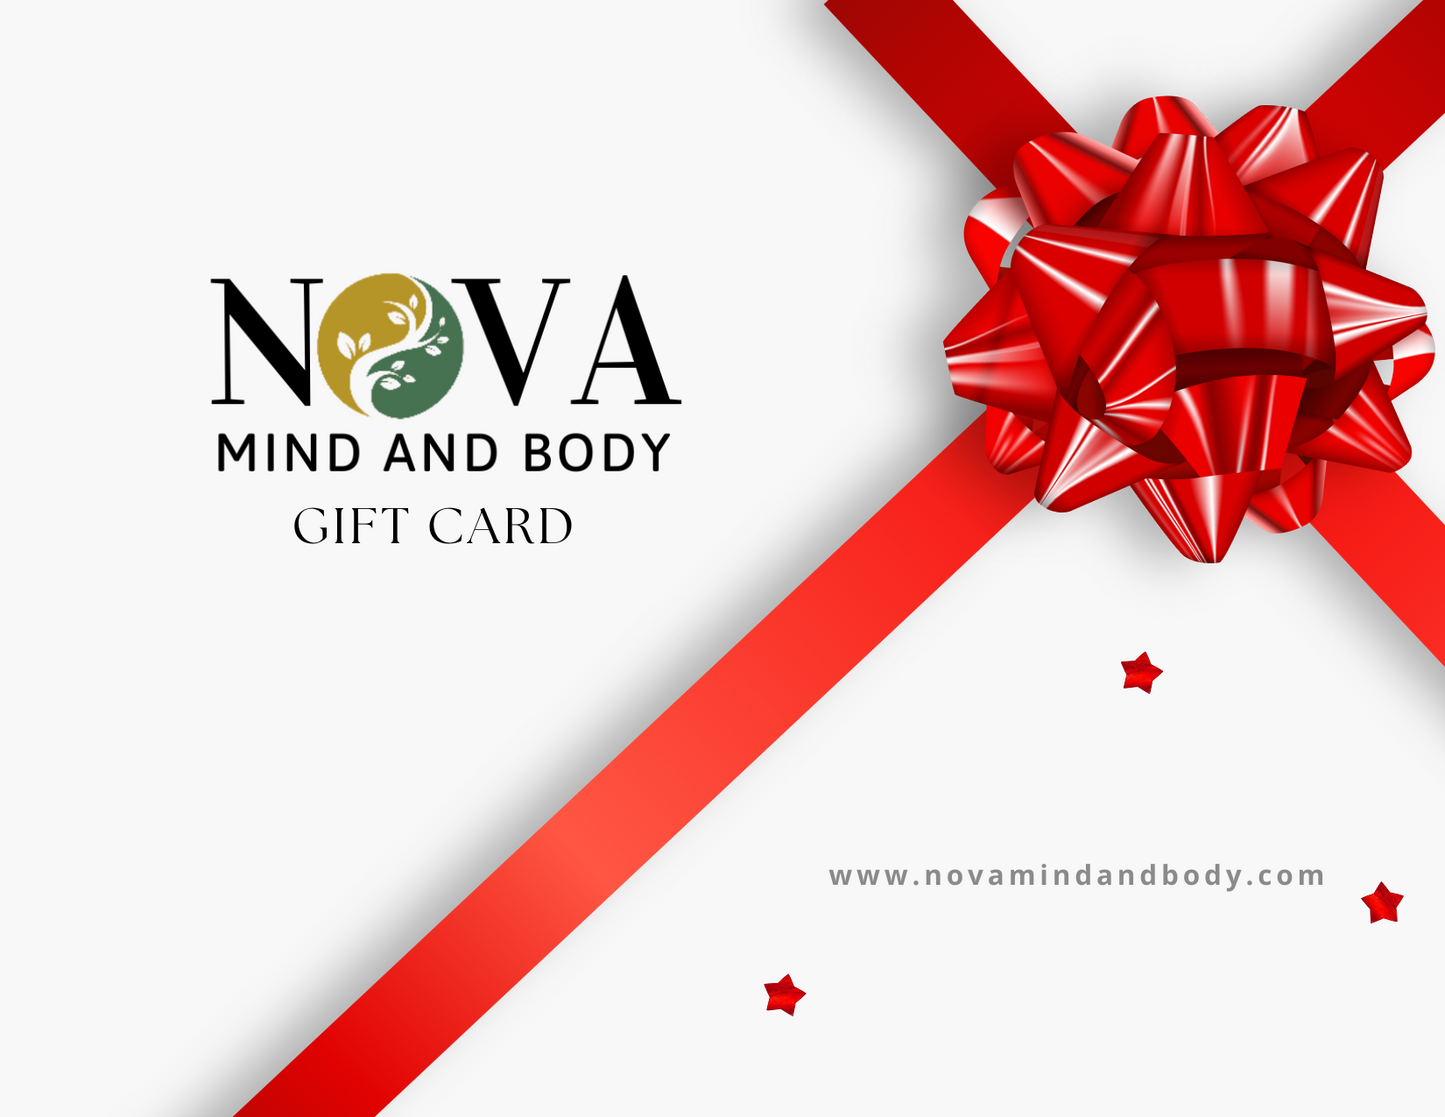 NOVA Mind and Body Store Gift Card